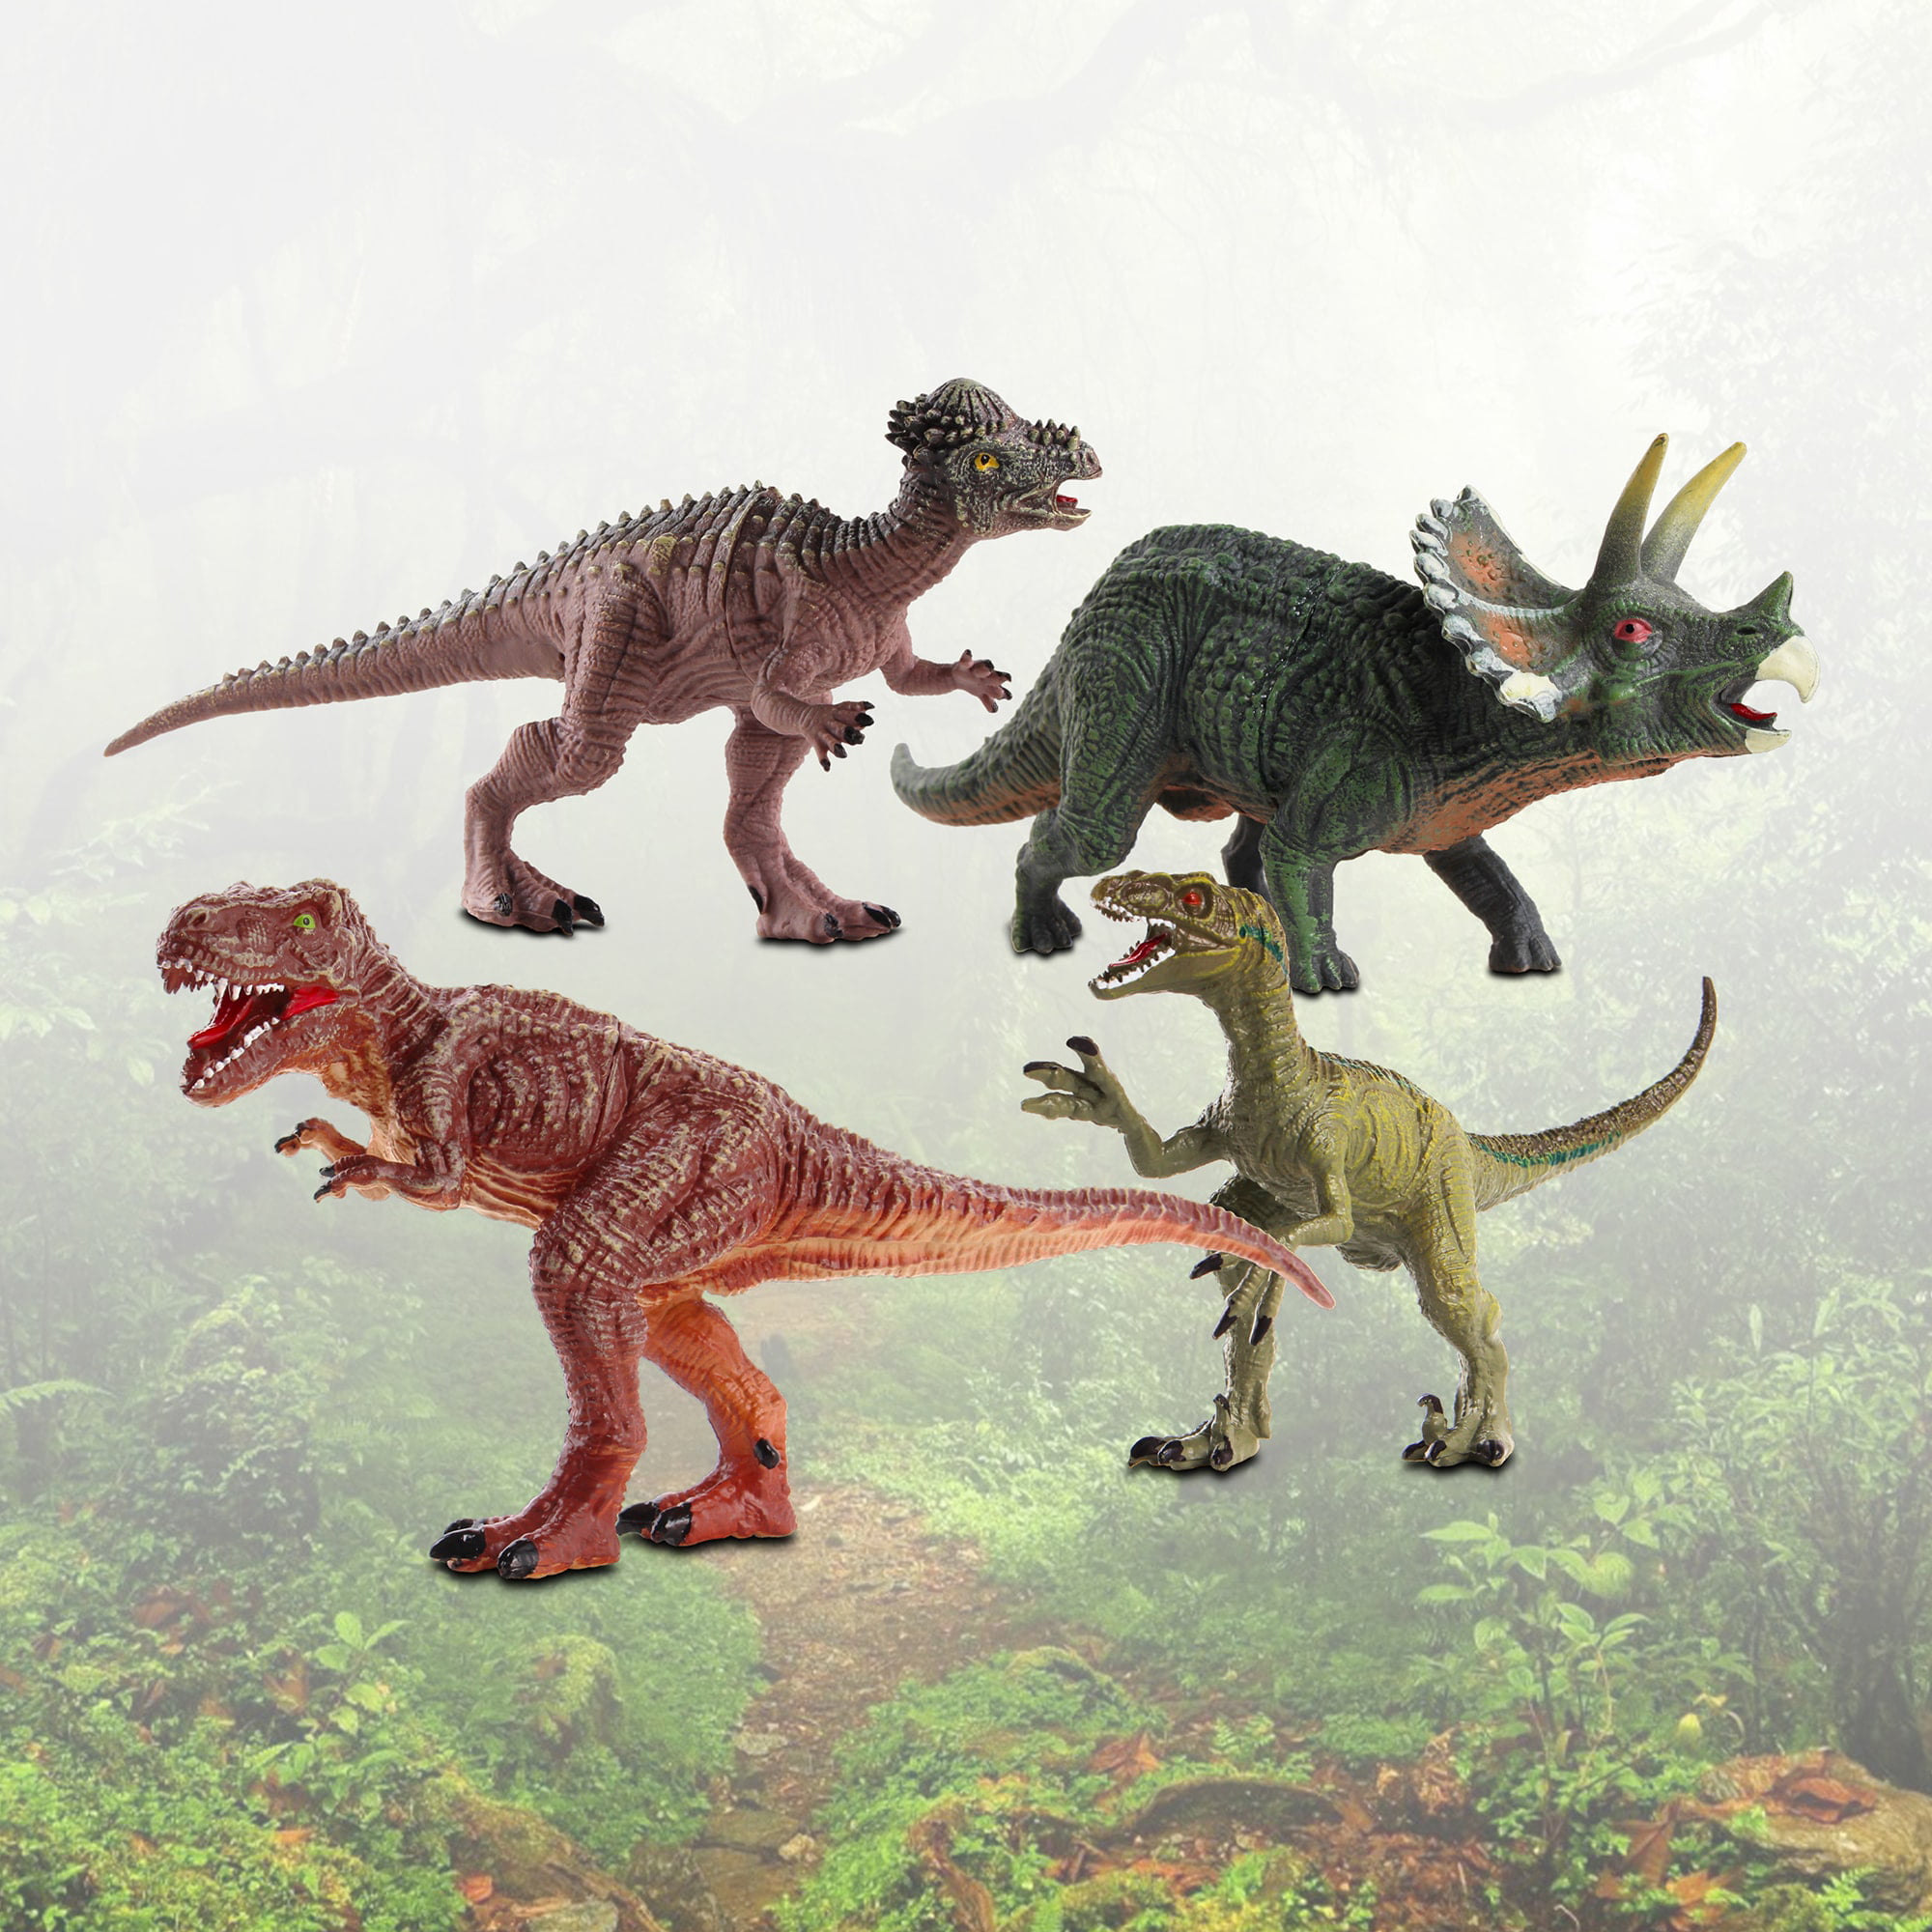 & Between Set Includes WowWorld: 3.5”-5” NKOK Long Pachycephalosaurus, Tall Dinosaurs Triceratops, & 8”-9.5” T-Rex, 4-Pack Poseable Playset Measure Dinosaurs Velociraptor, Medium